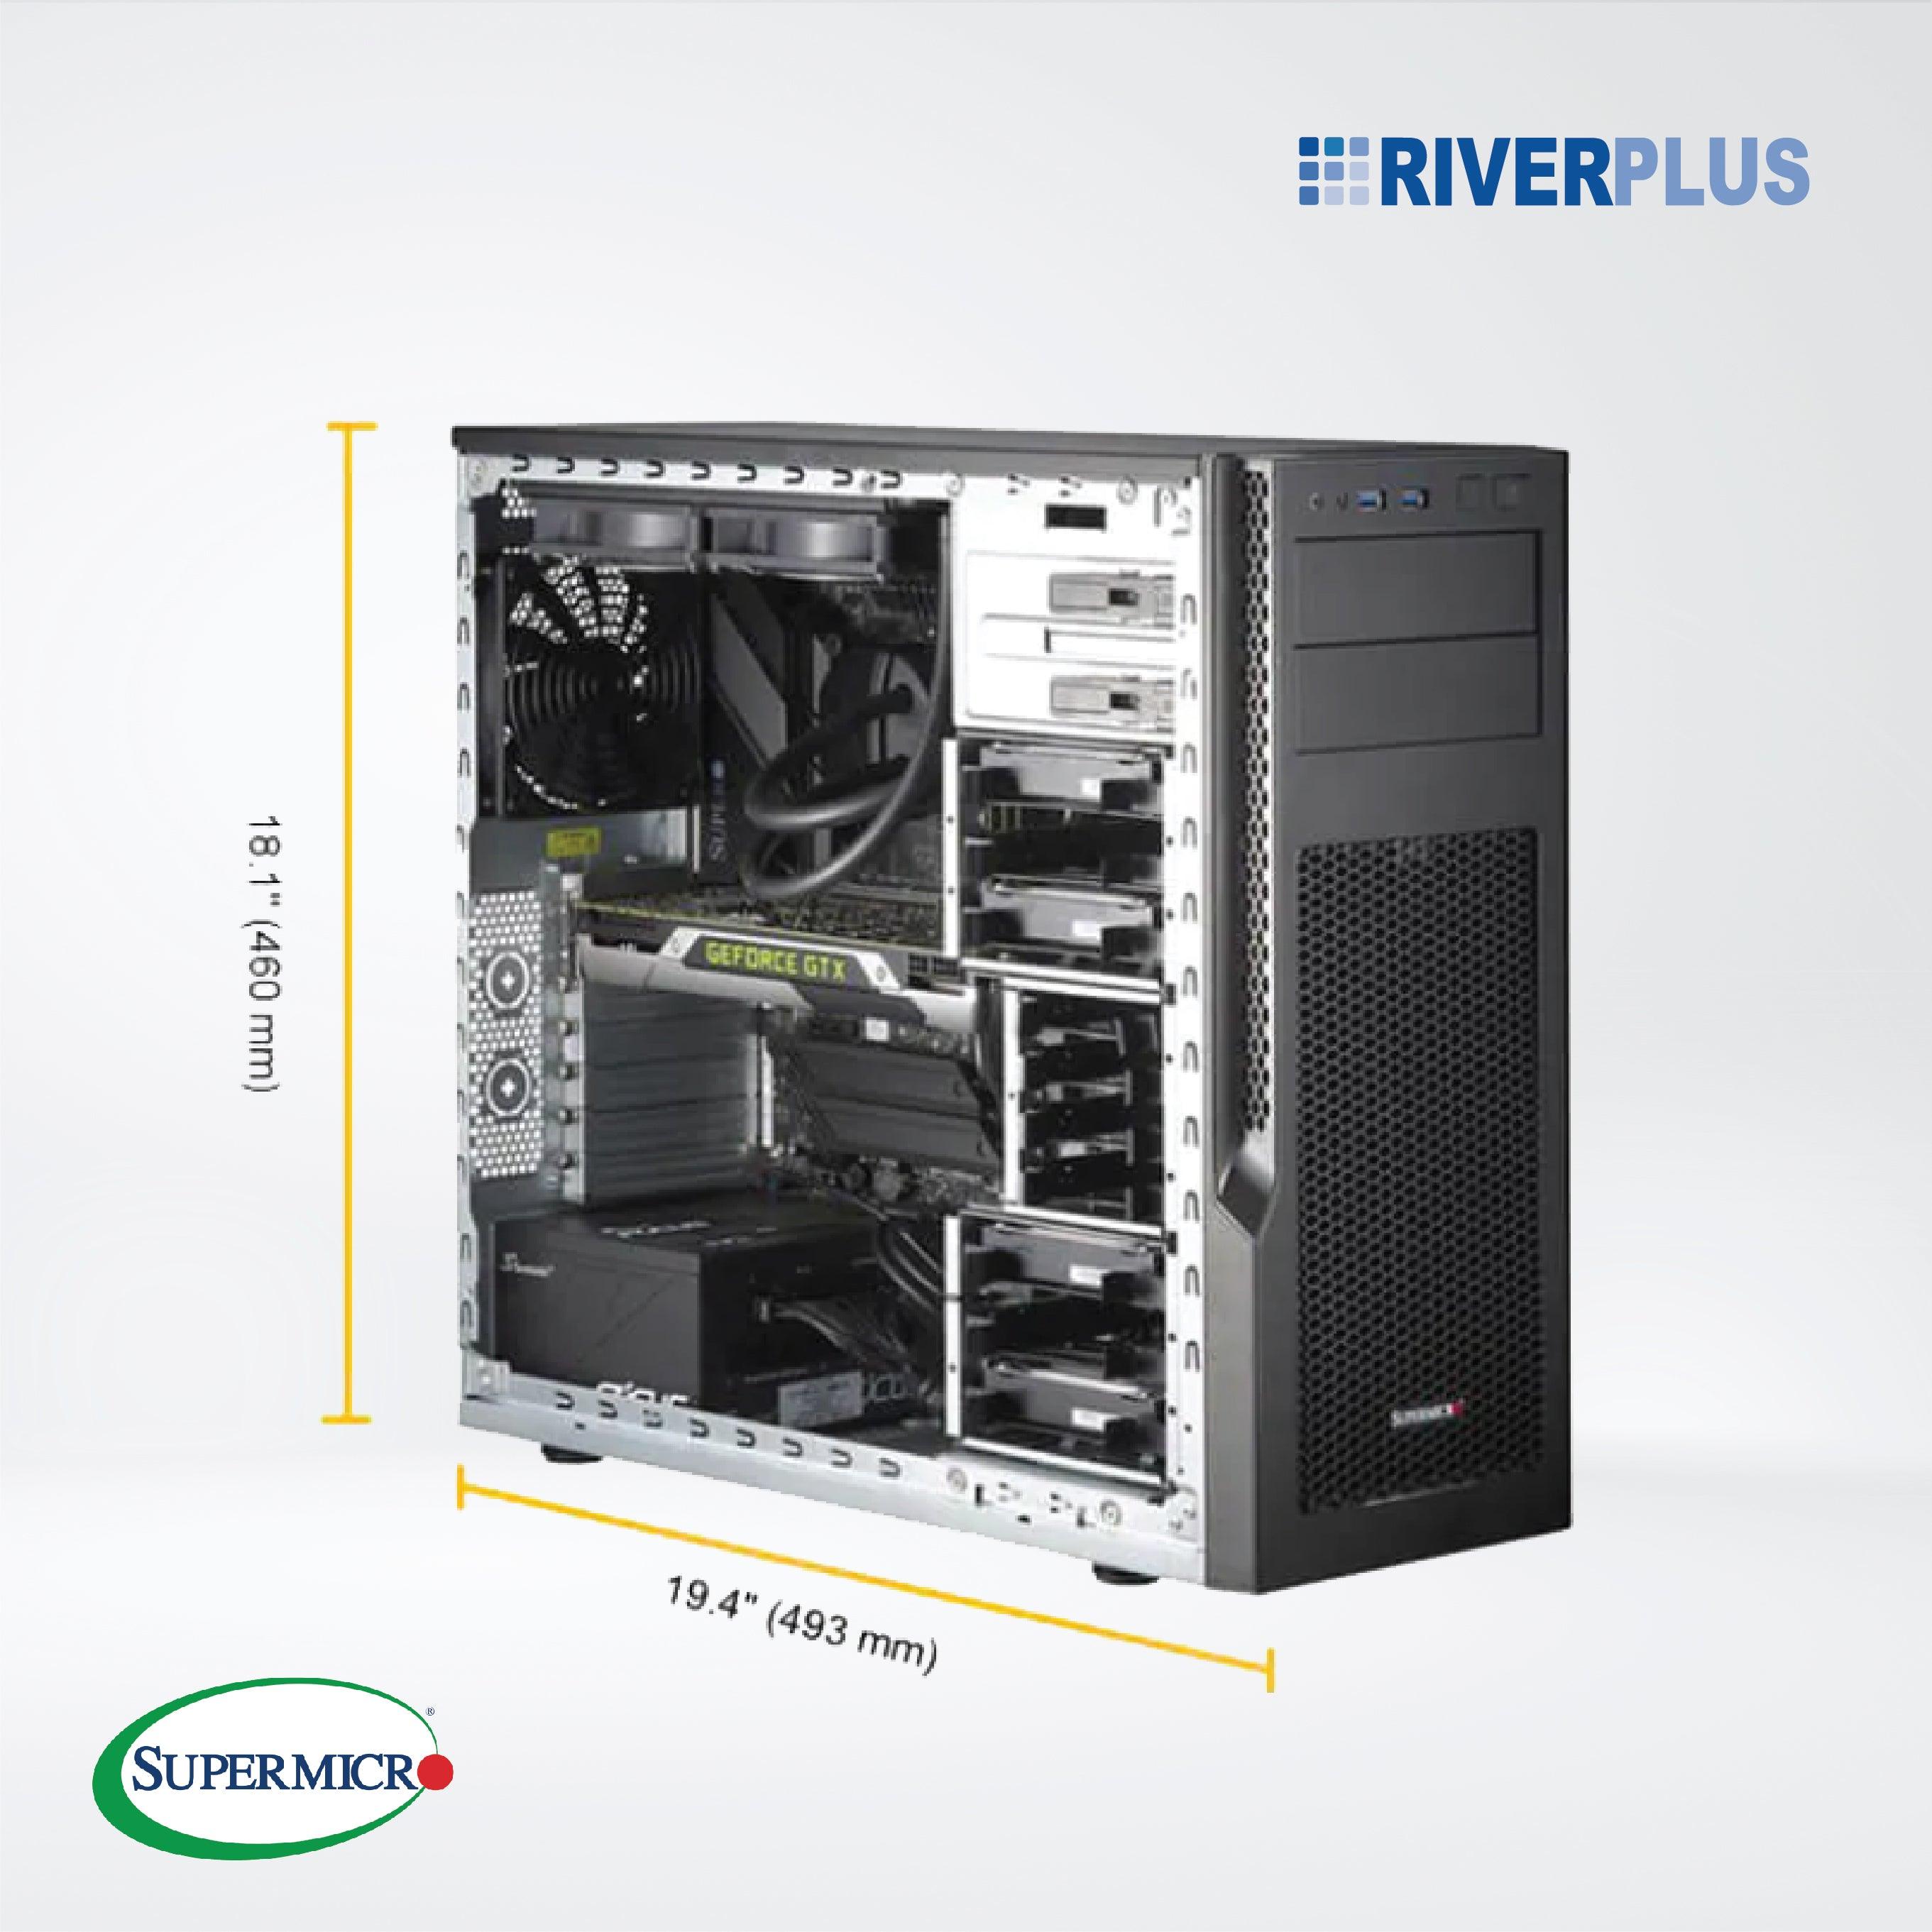 SYS-530AD-I Desktop Gaming Workstation - Riverplus